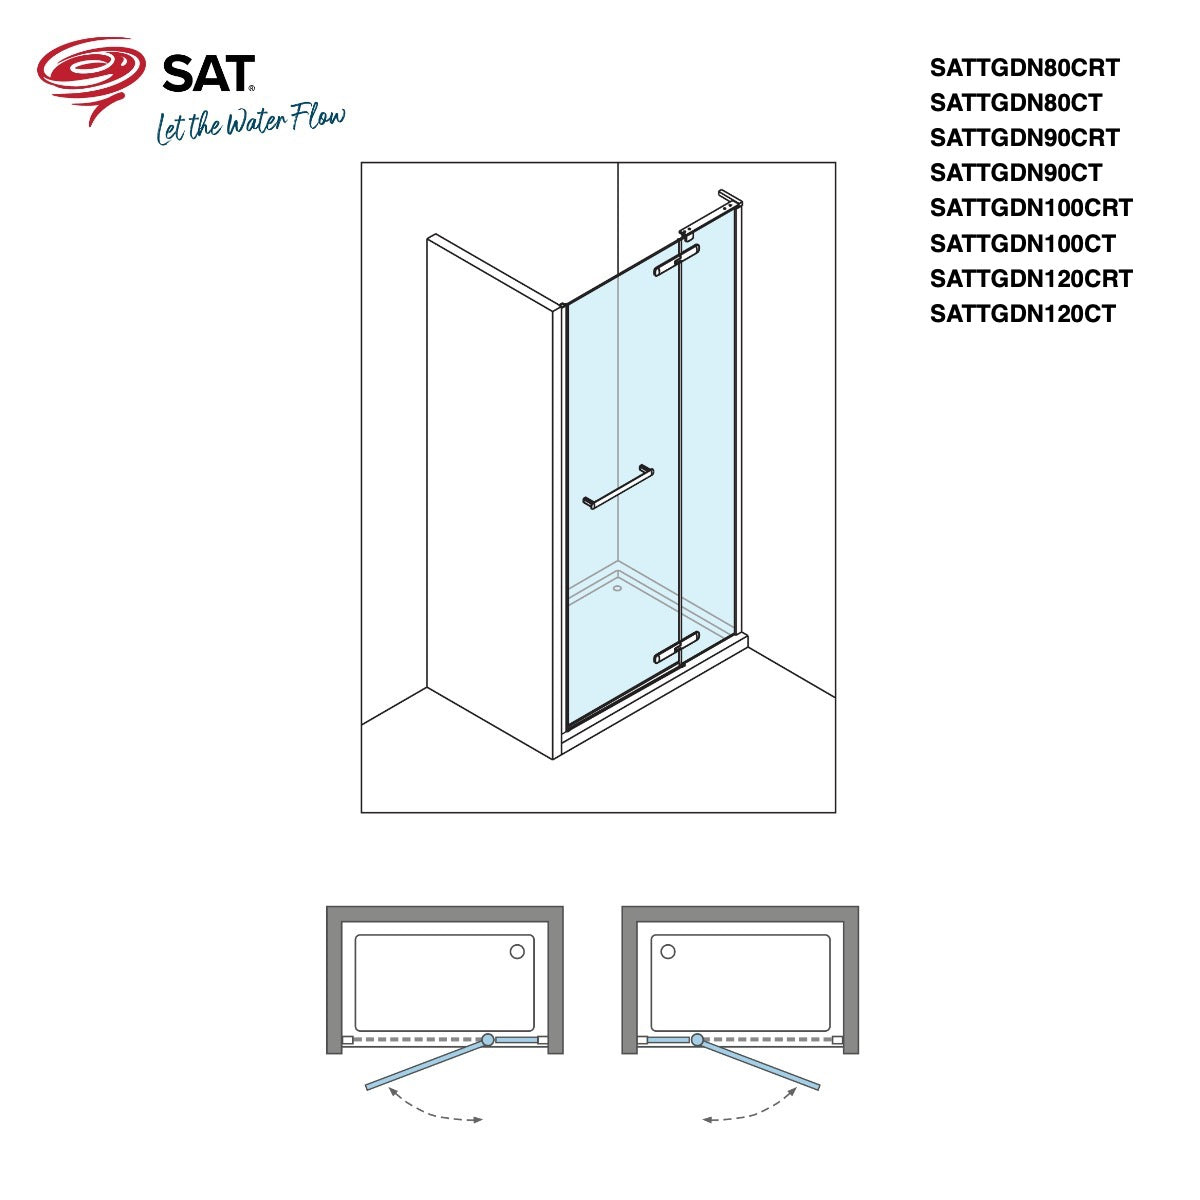 SATTGDN80CRT SAT TGD NEW 80 cm tuš vrata brez okvirja